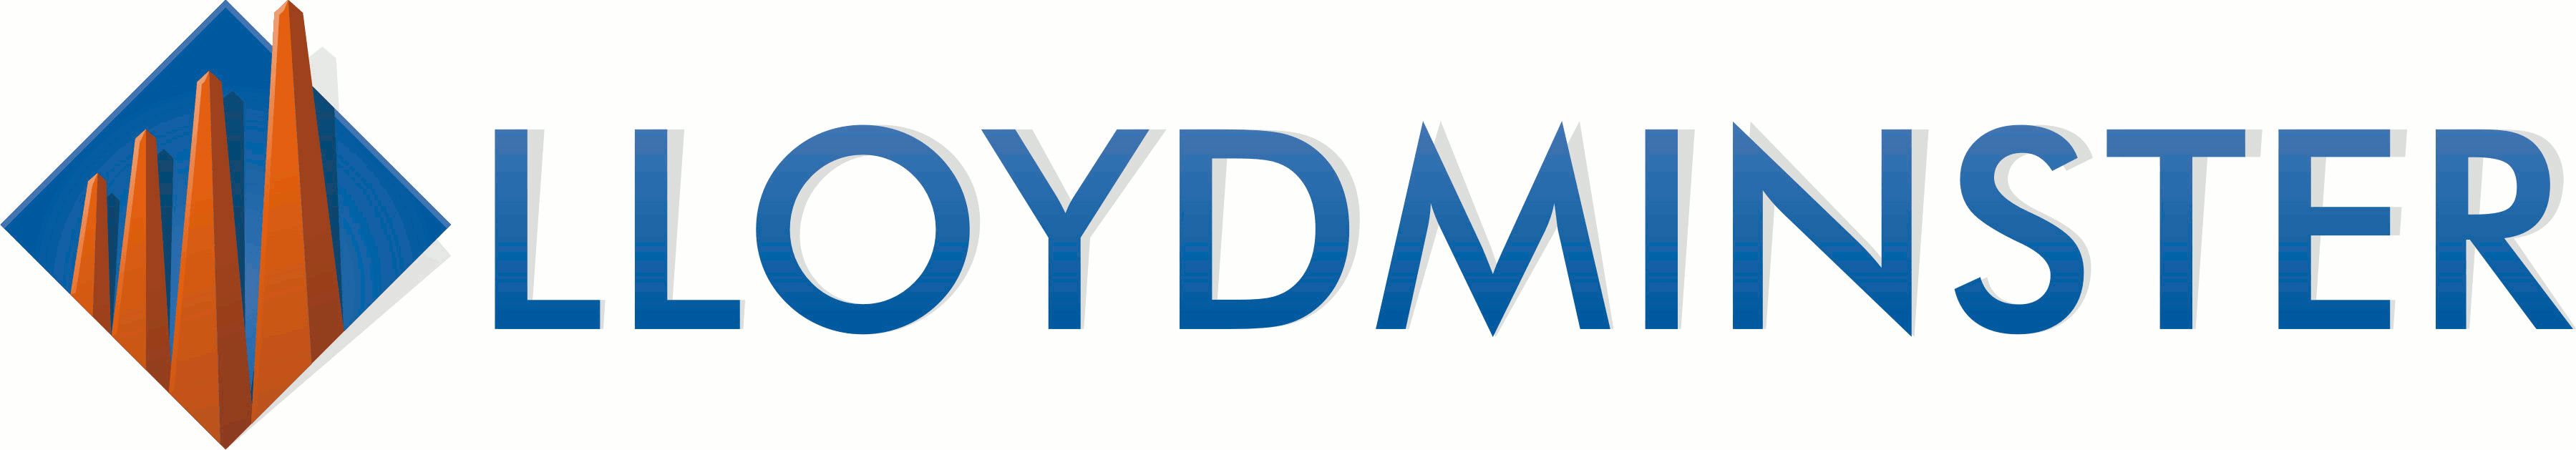 Lloydminster-logo